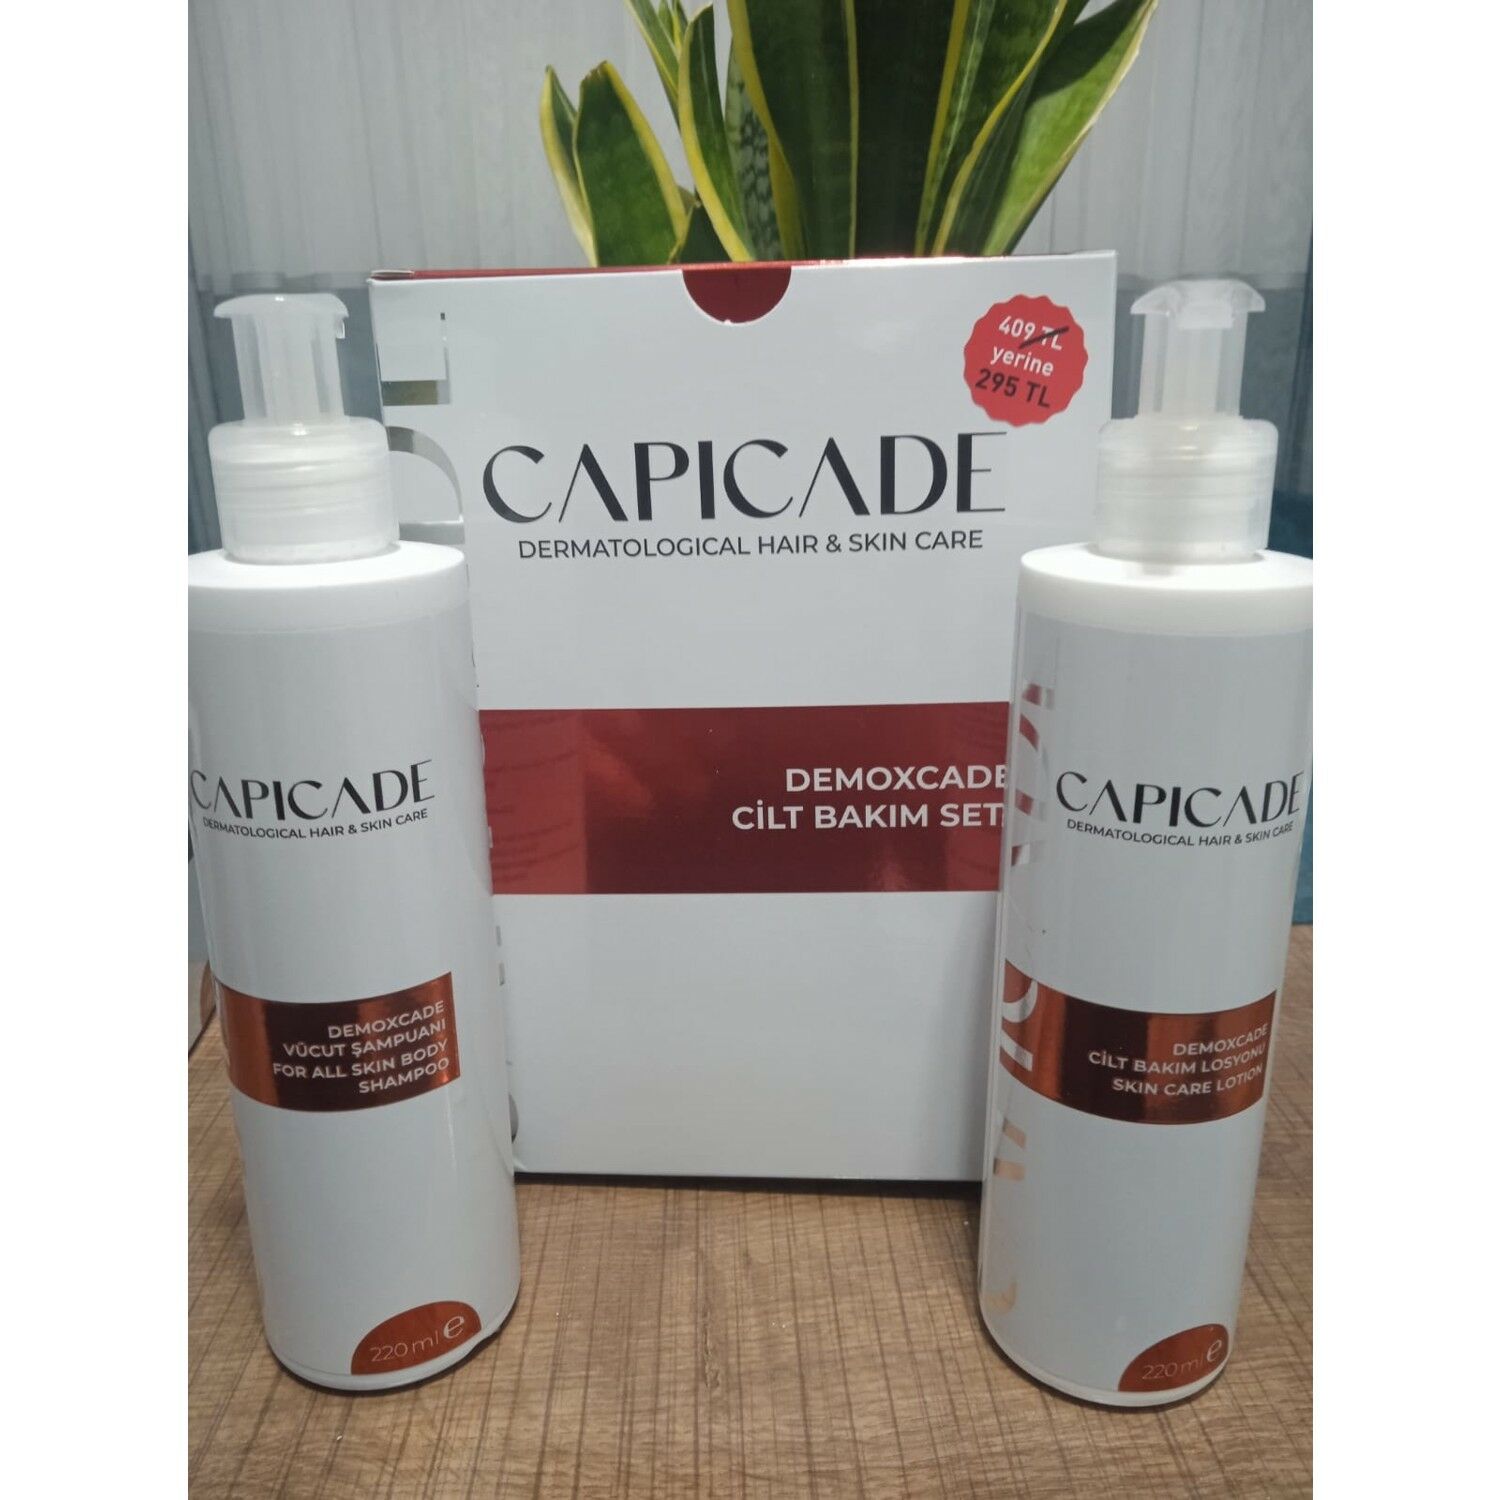 Capicade Demoxcade Cilt Bakım Seti - Vücut Şampuanı 220 ml + Vücut Losyonu 220 ml (295,00 TL Etiketli)